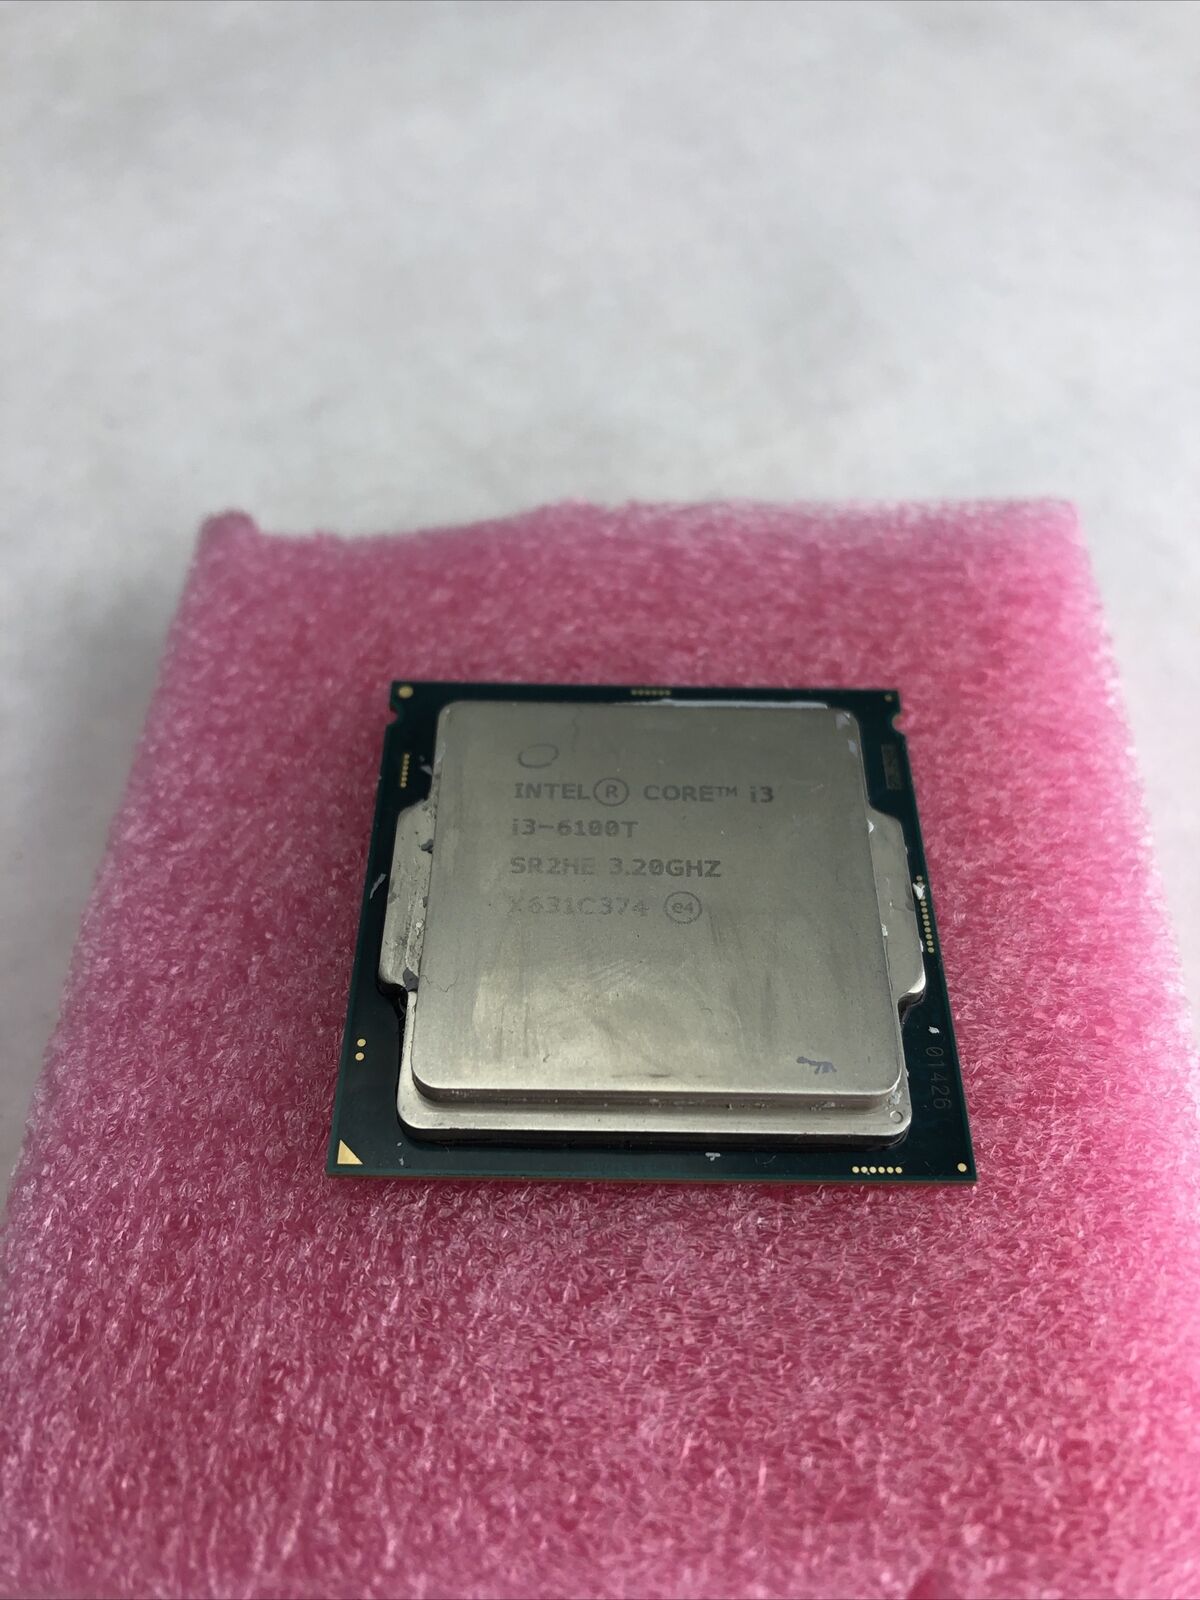 Intel Core i3-6100T 3.2GHz LGA1151 Socket CPU